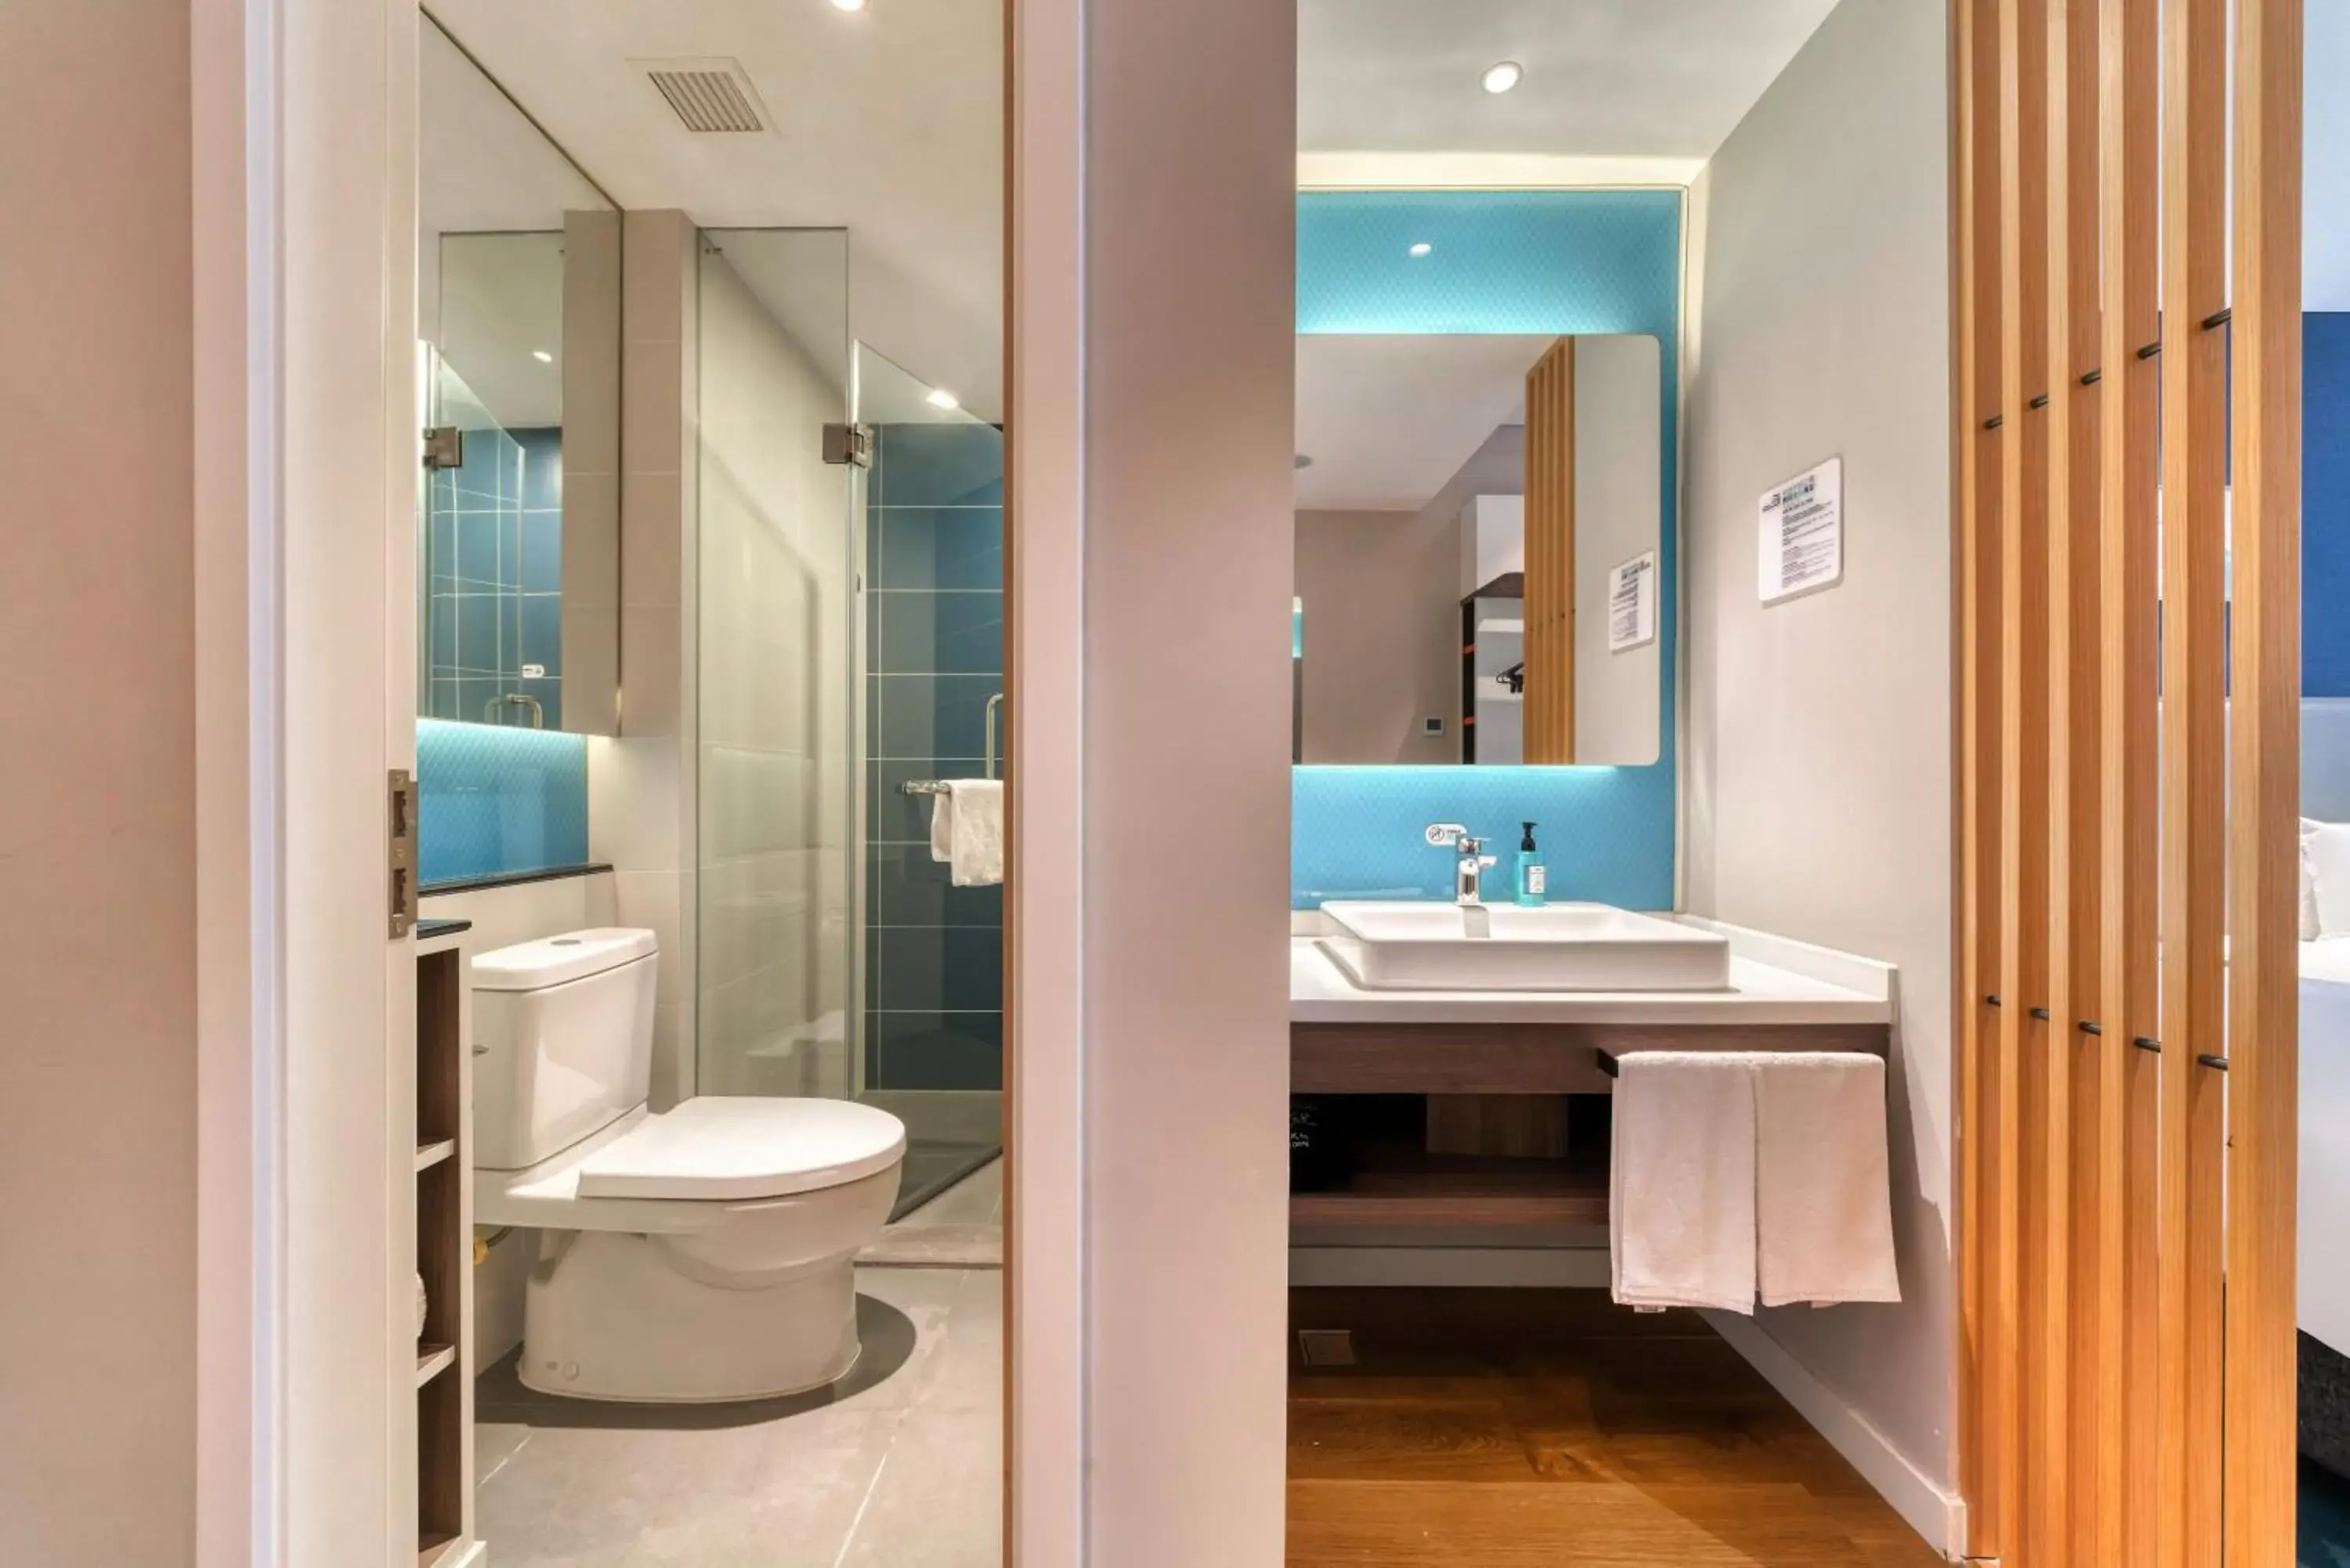 Photo of the whole room, Bathroom in HOLIDAY INN EXPRESS HANGZHOU BINJIANG